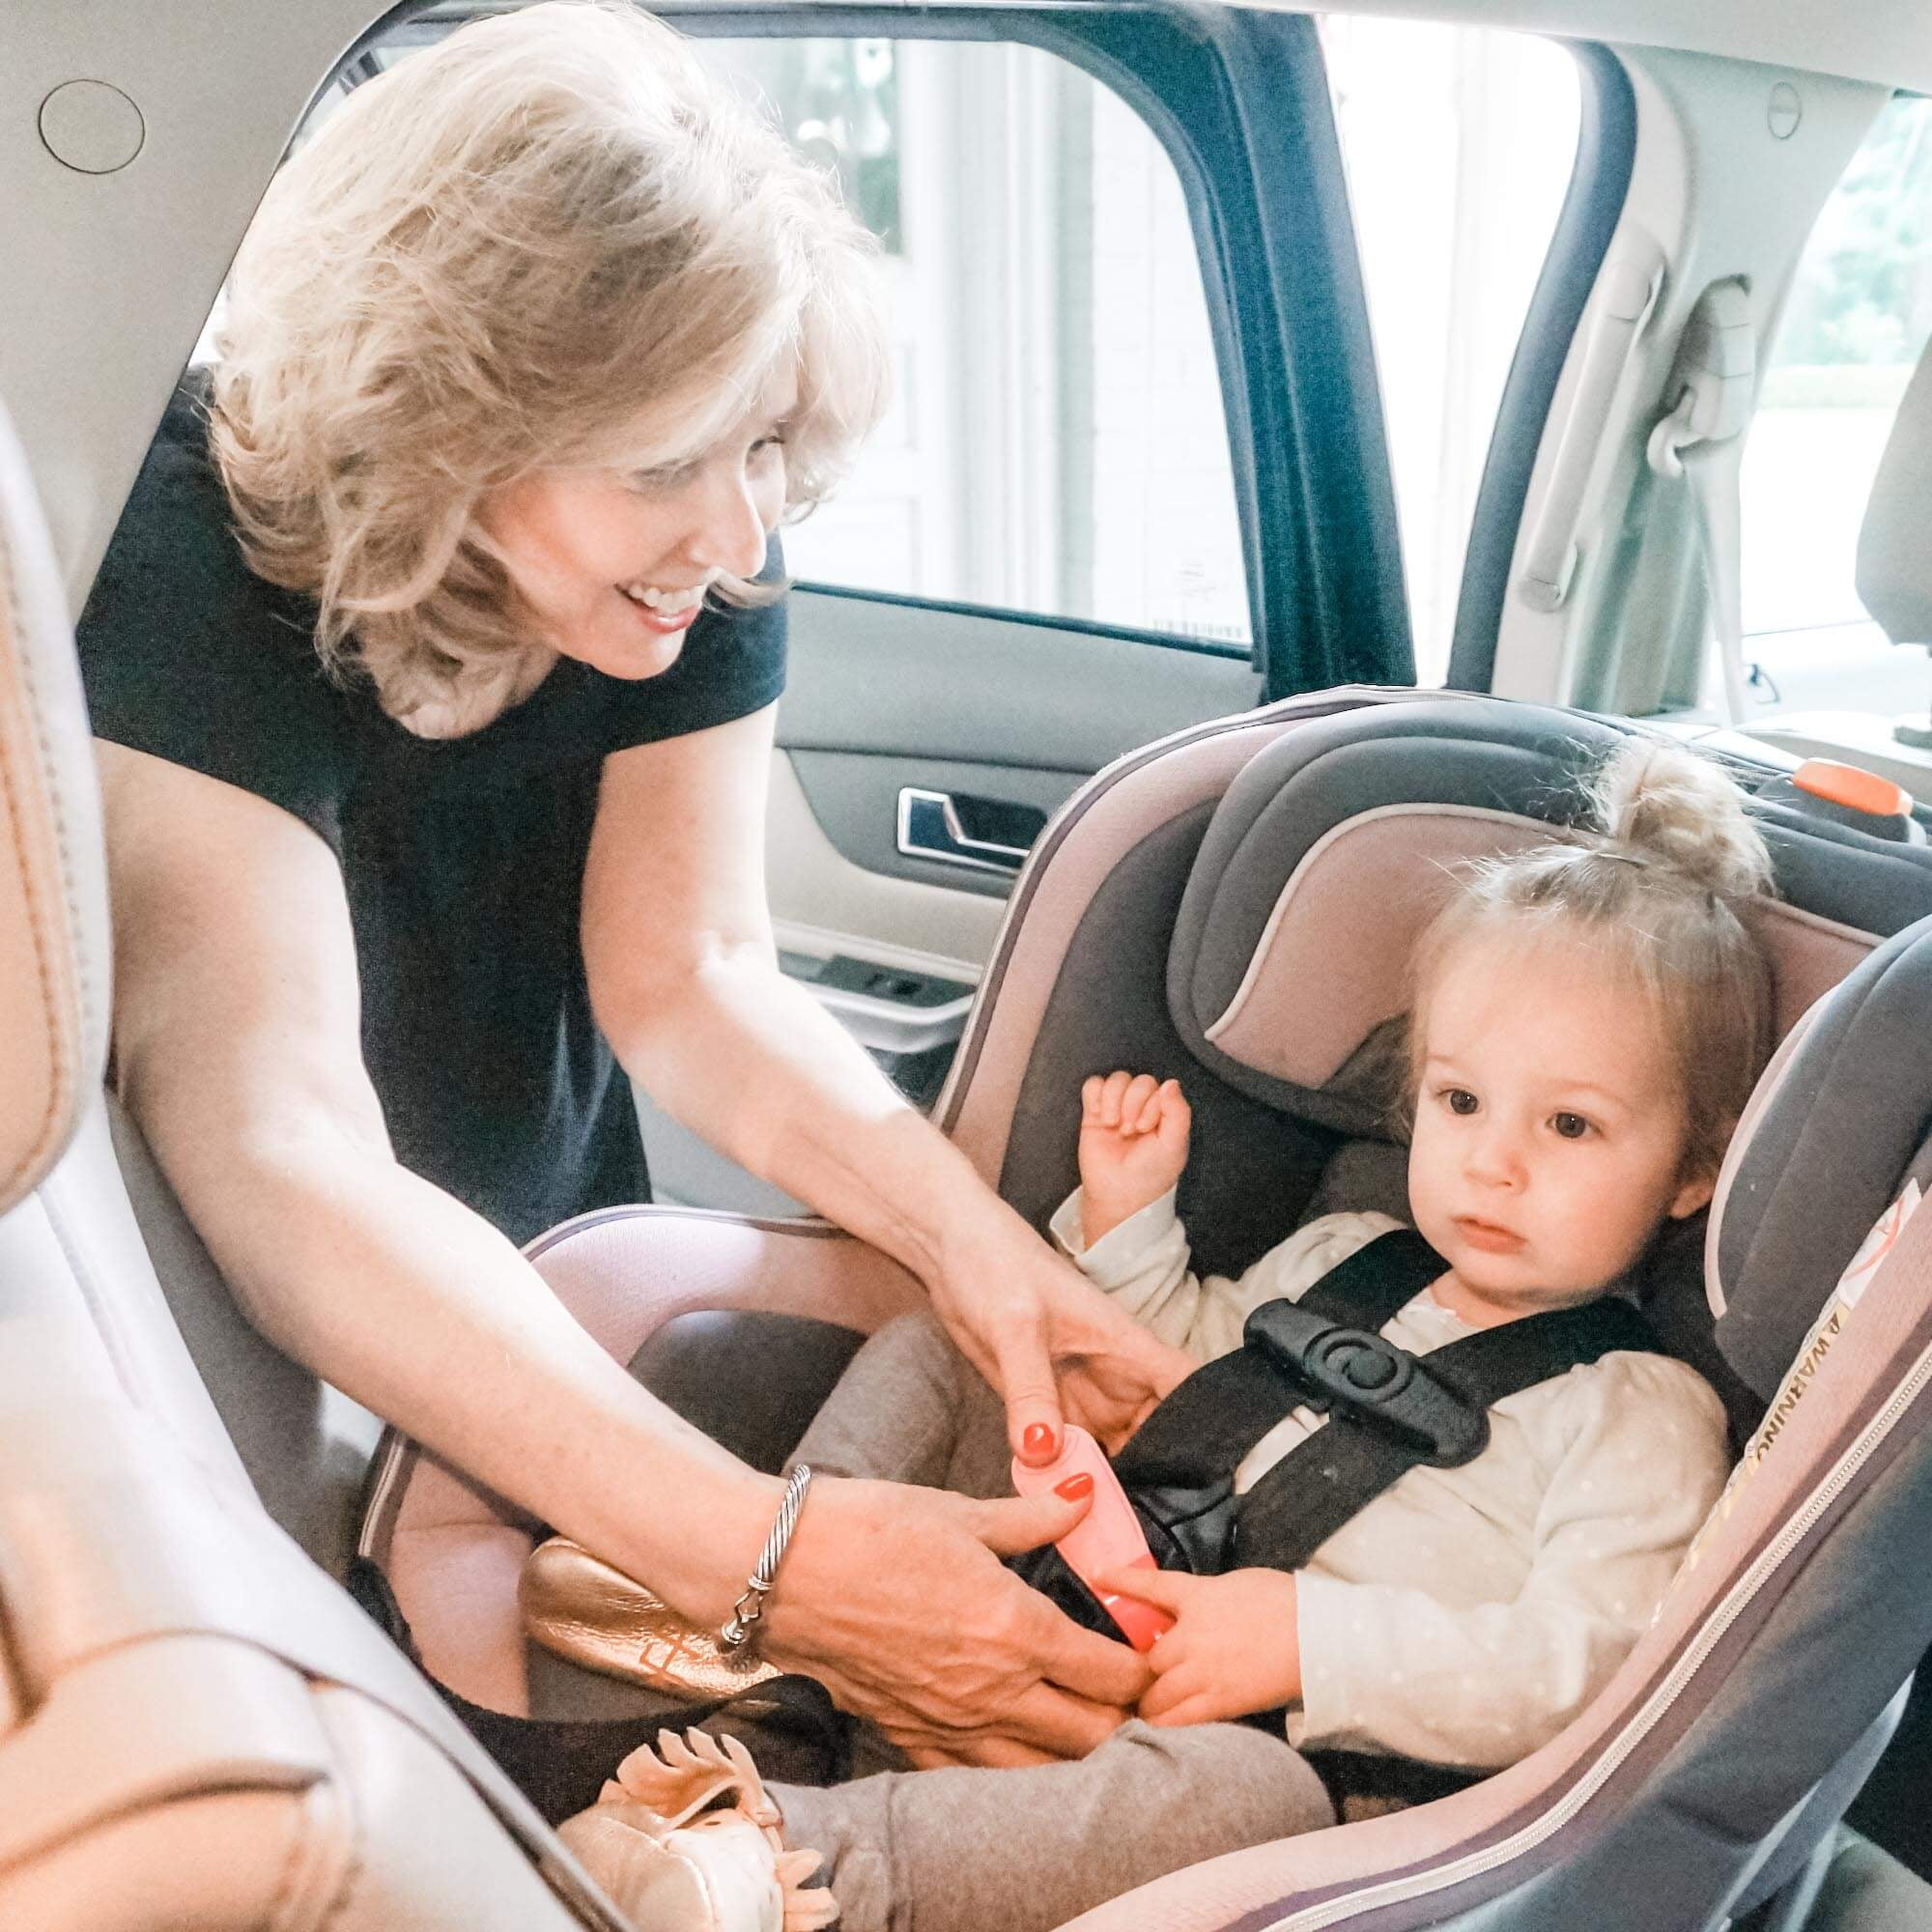 B J6G8 Premium Easy Unbuckle Release WeThinkeer Child Car Seat Belt Unbuckler 